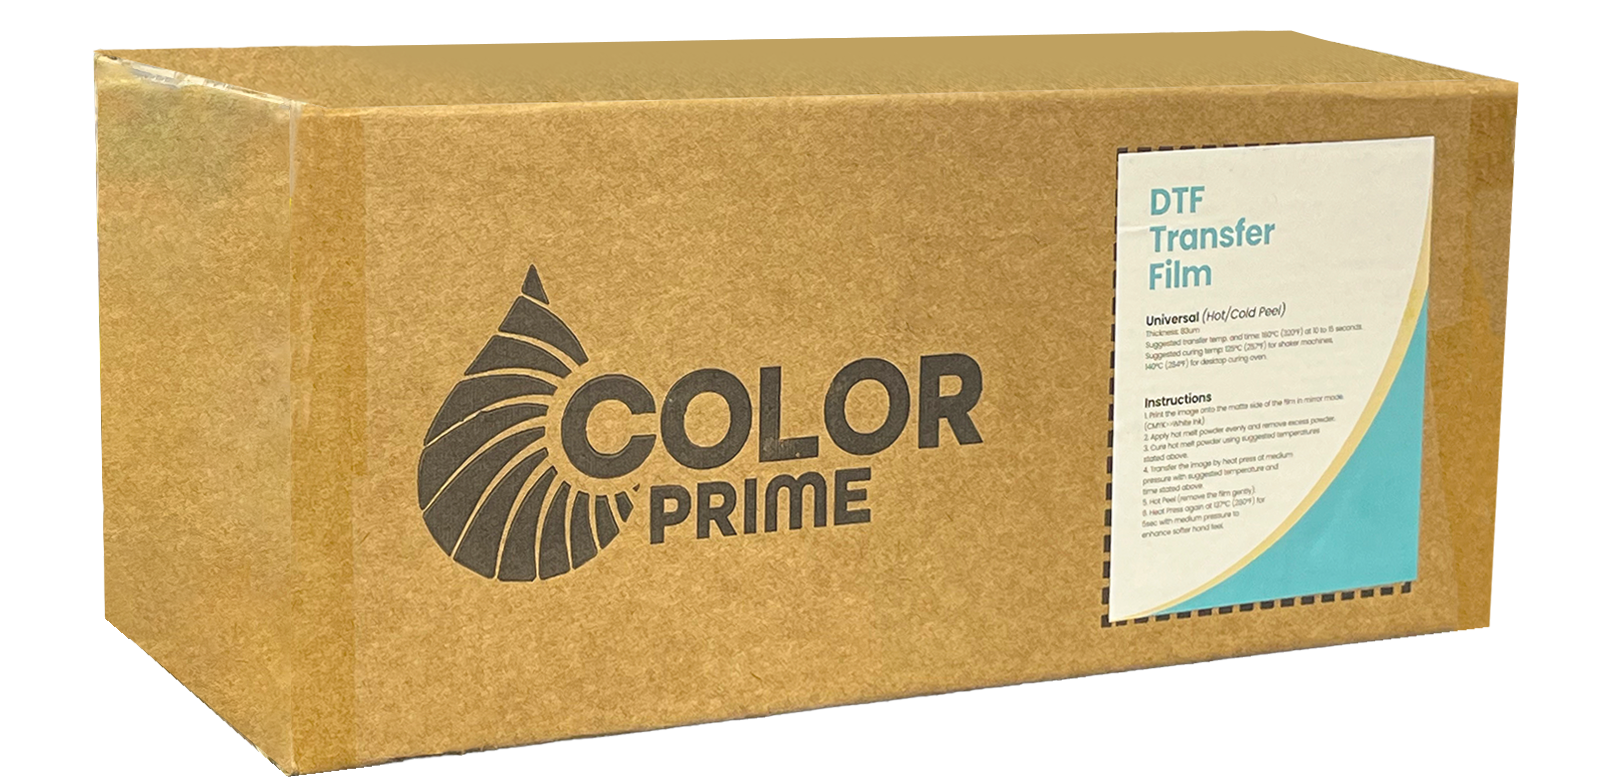 color prime film box dtf station